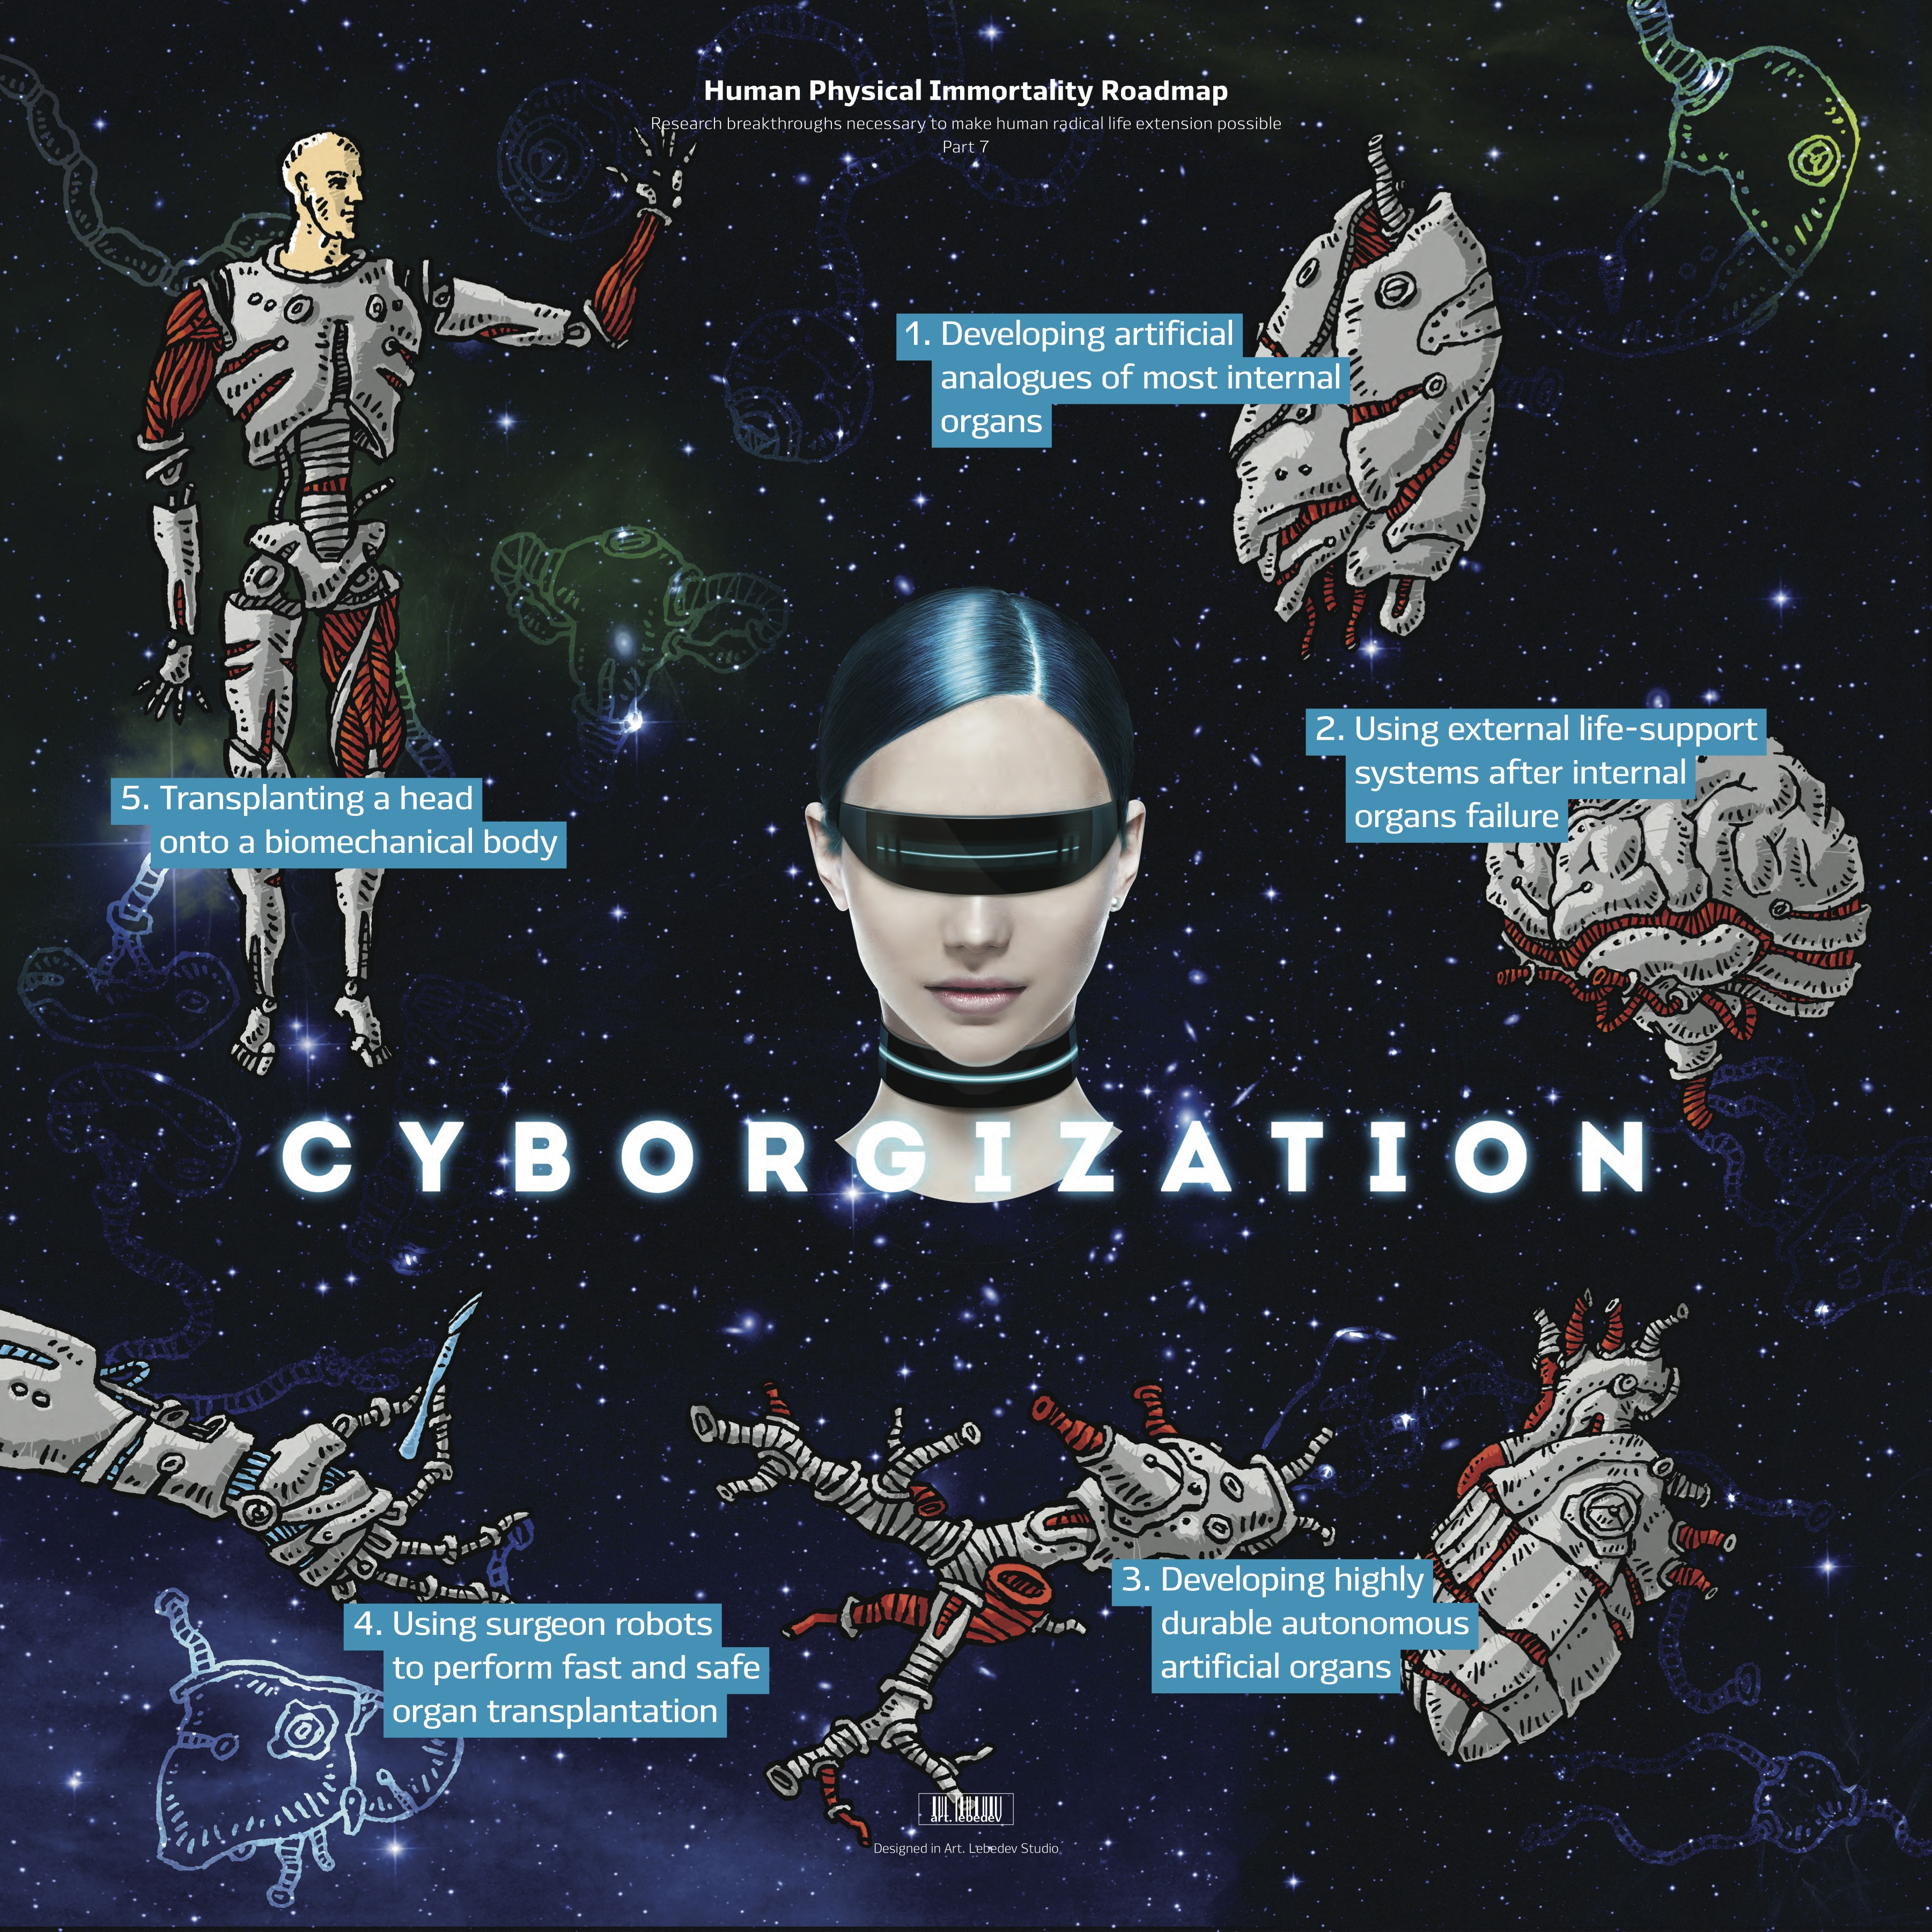 roadmap-7-cyborgization.jpg